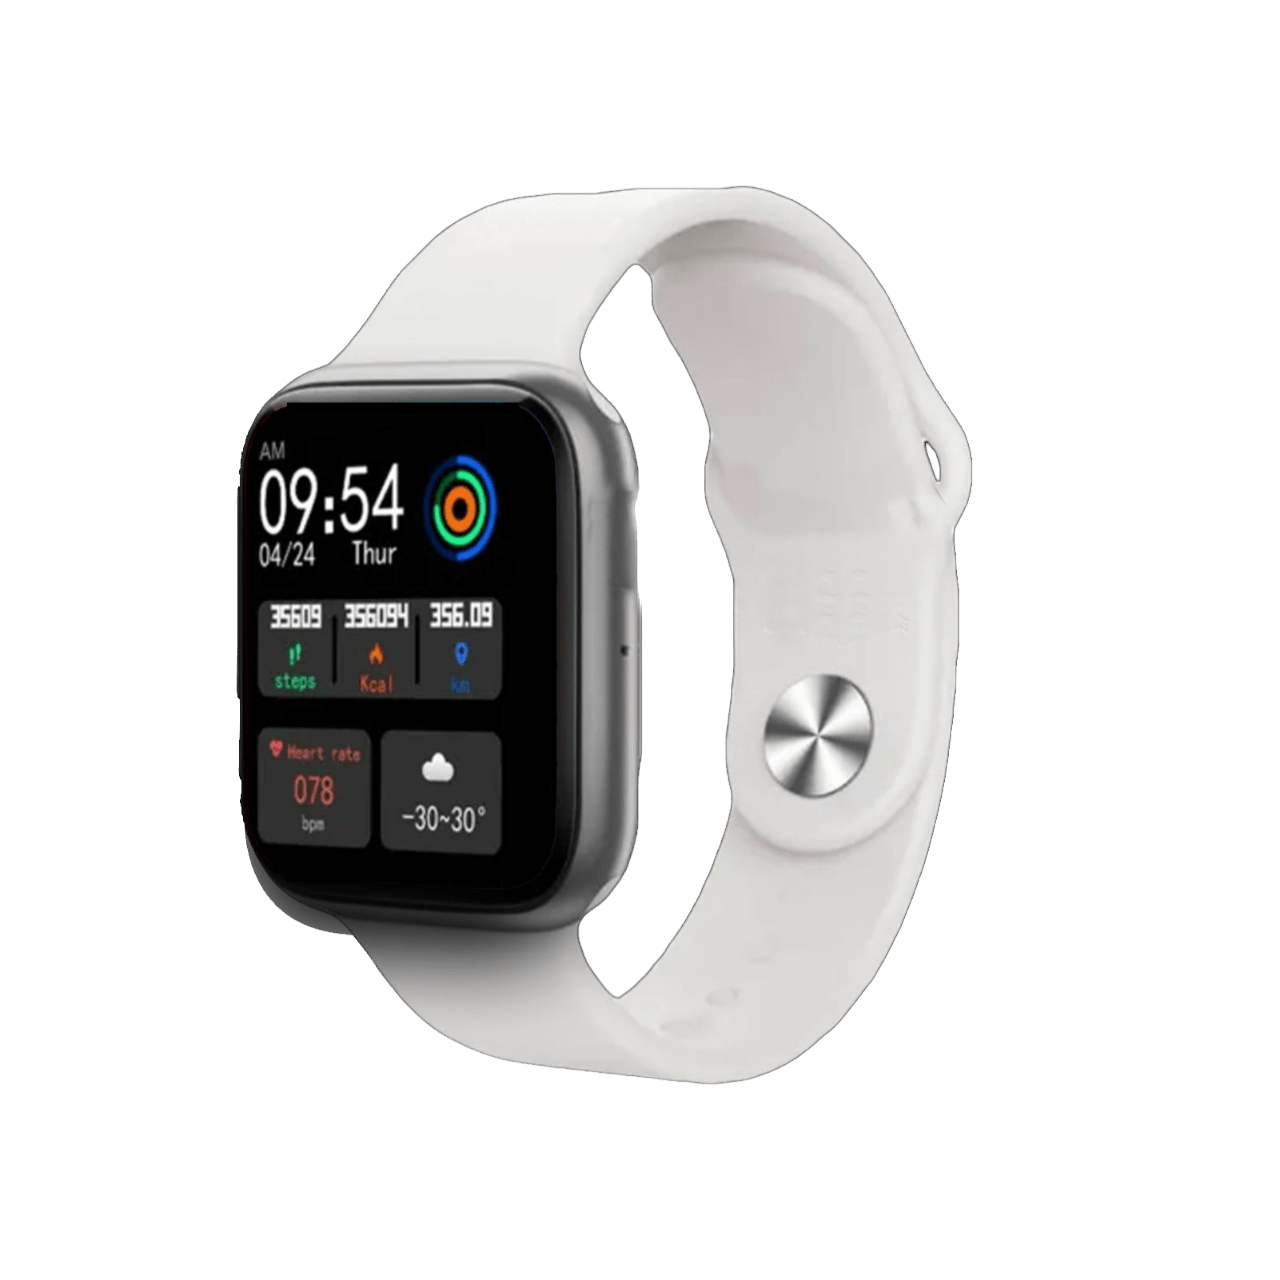 Smartwatch Reloj Inteligente deportivo fitness hombre mujer blanco klack kt500p compatible con android e ios 154 t500plus